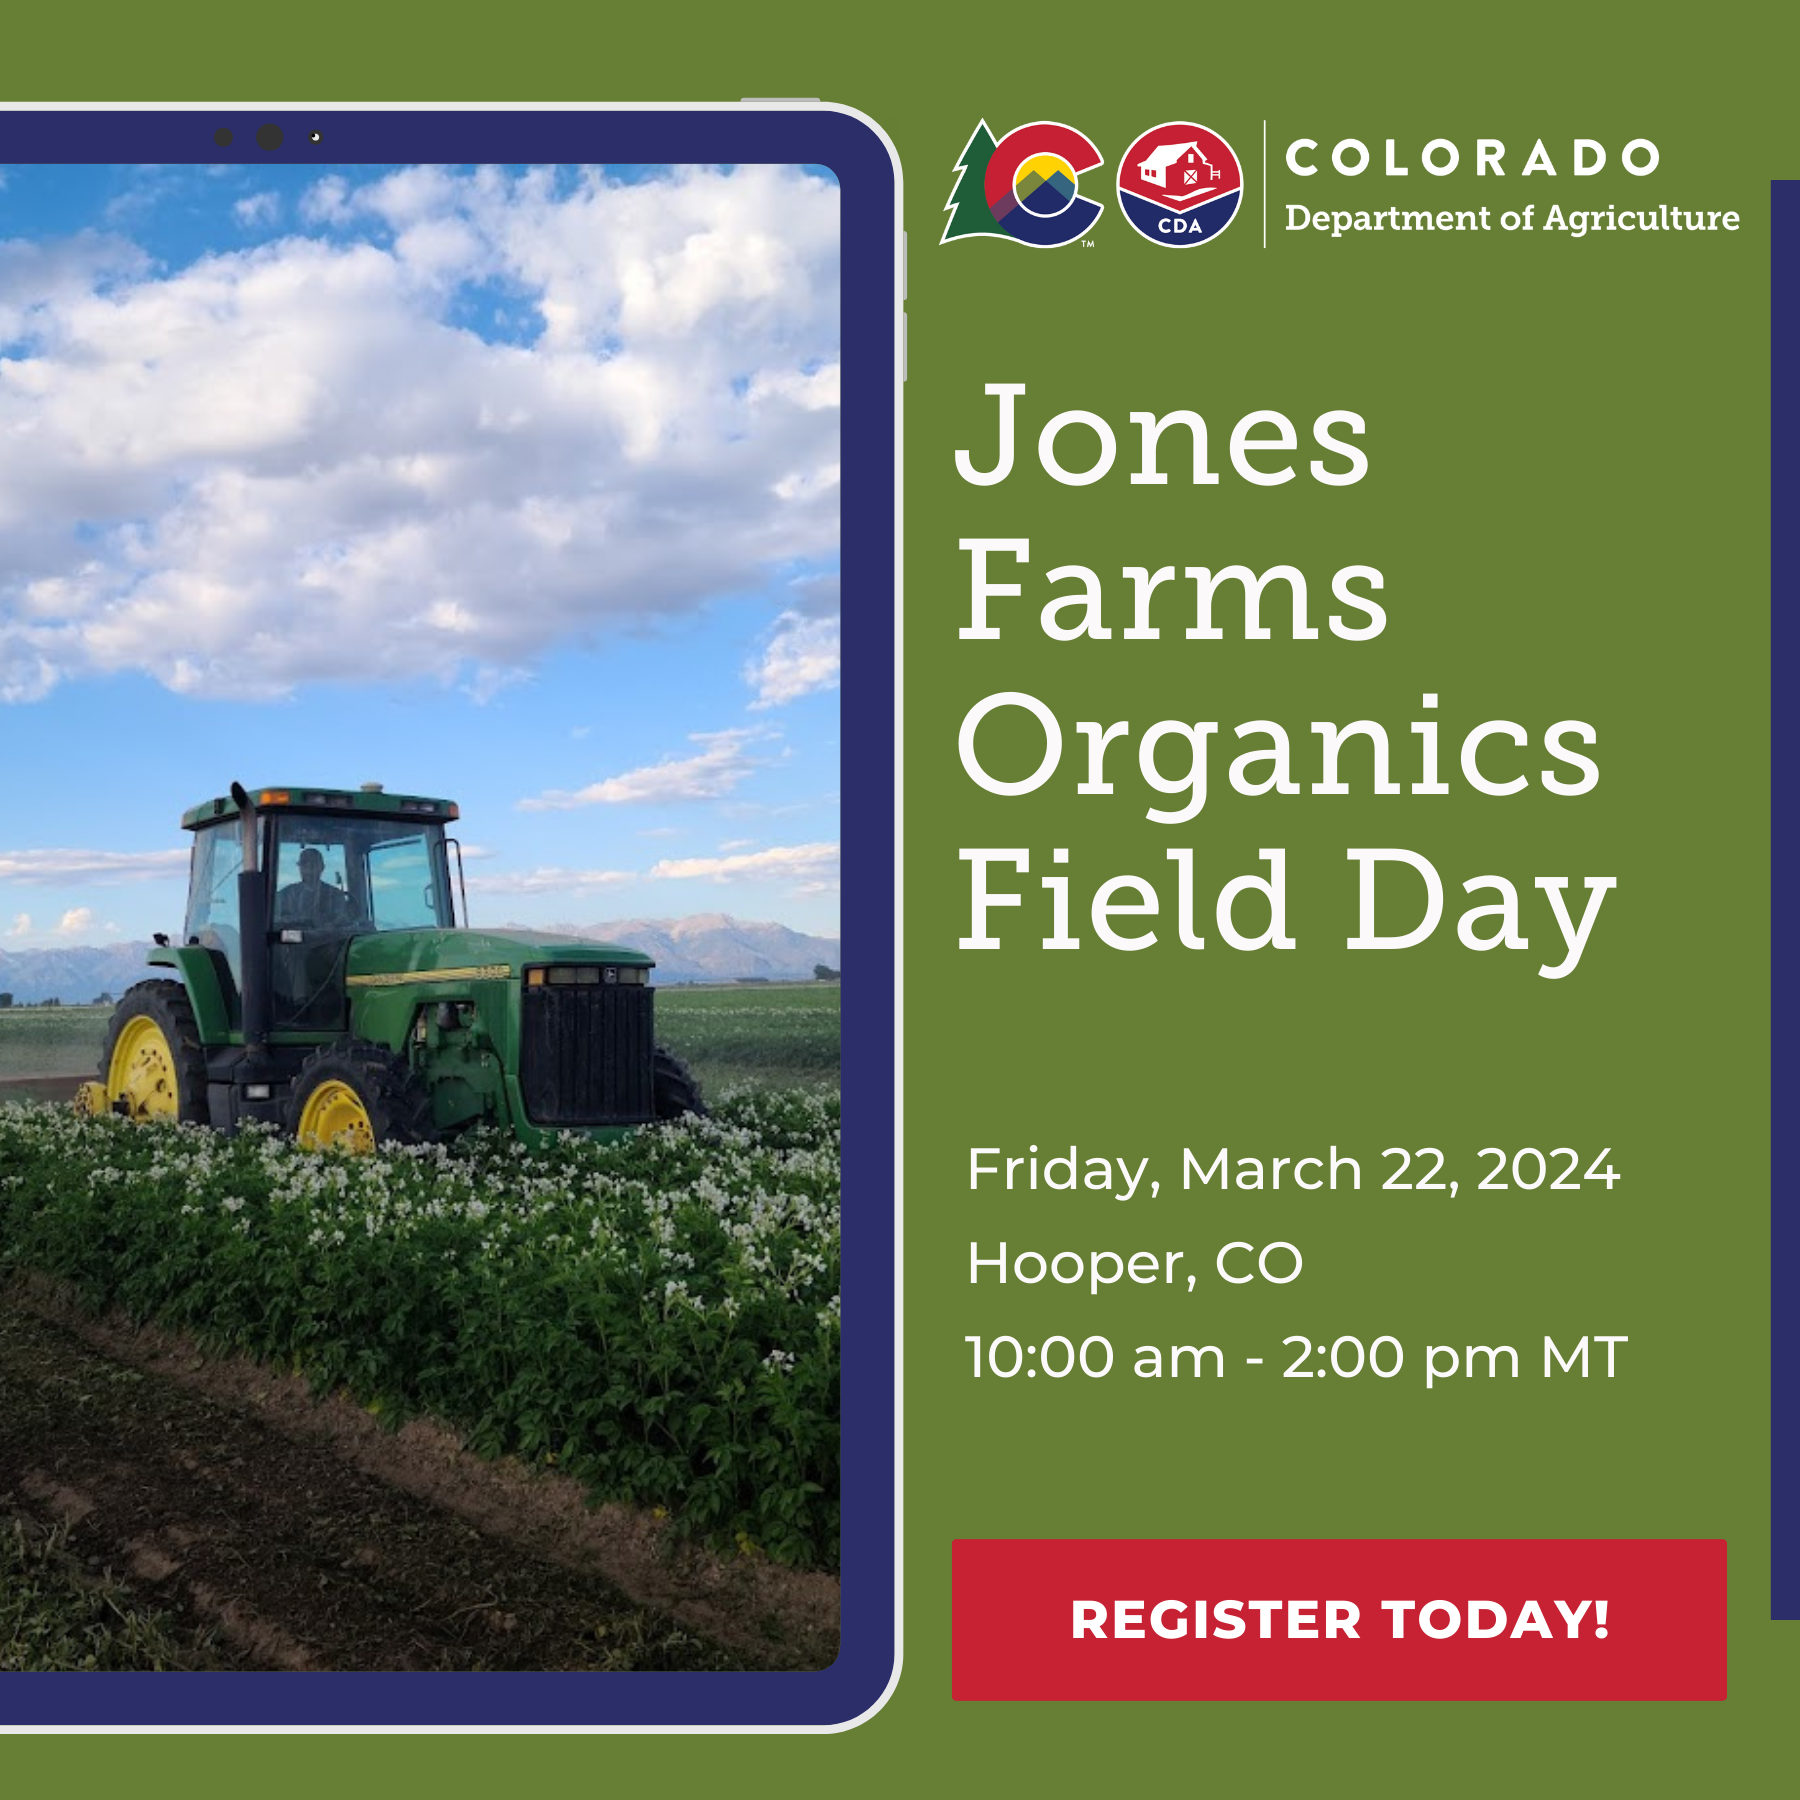 Jones Farms Organics Field Day Register Today